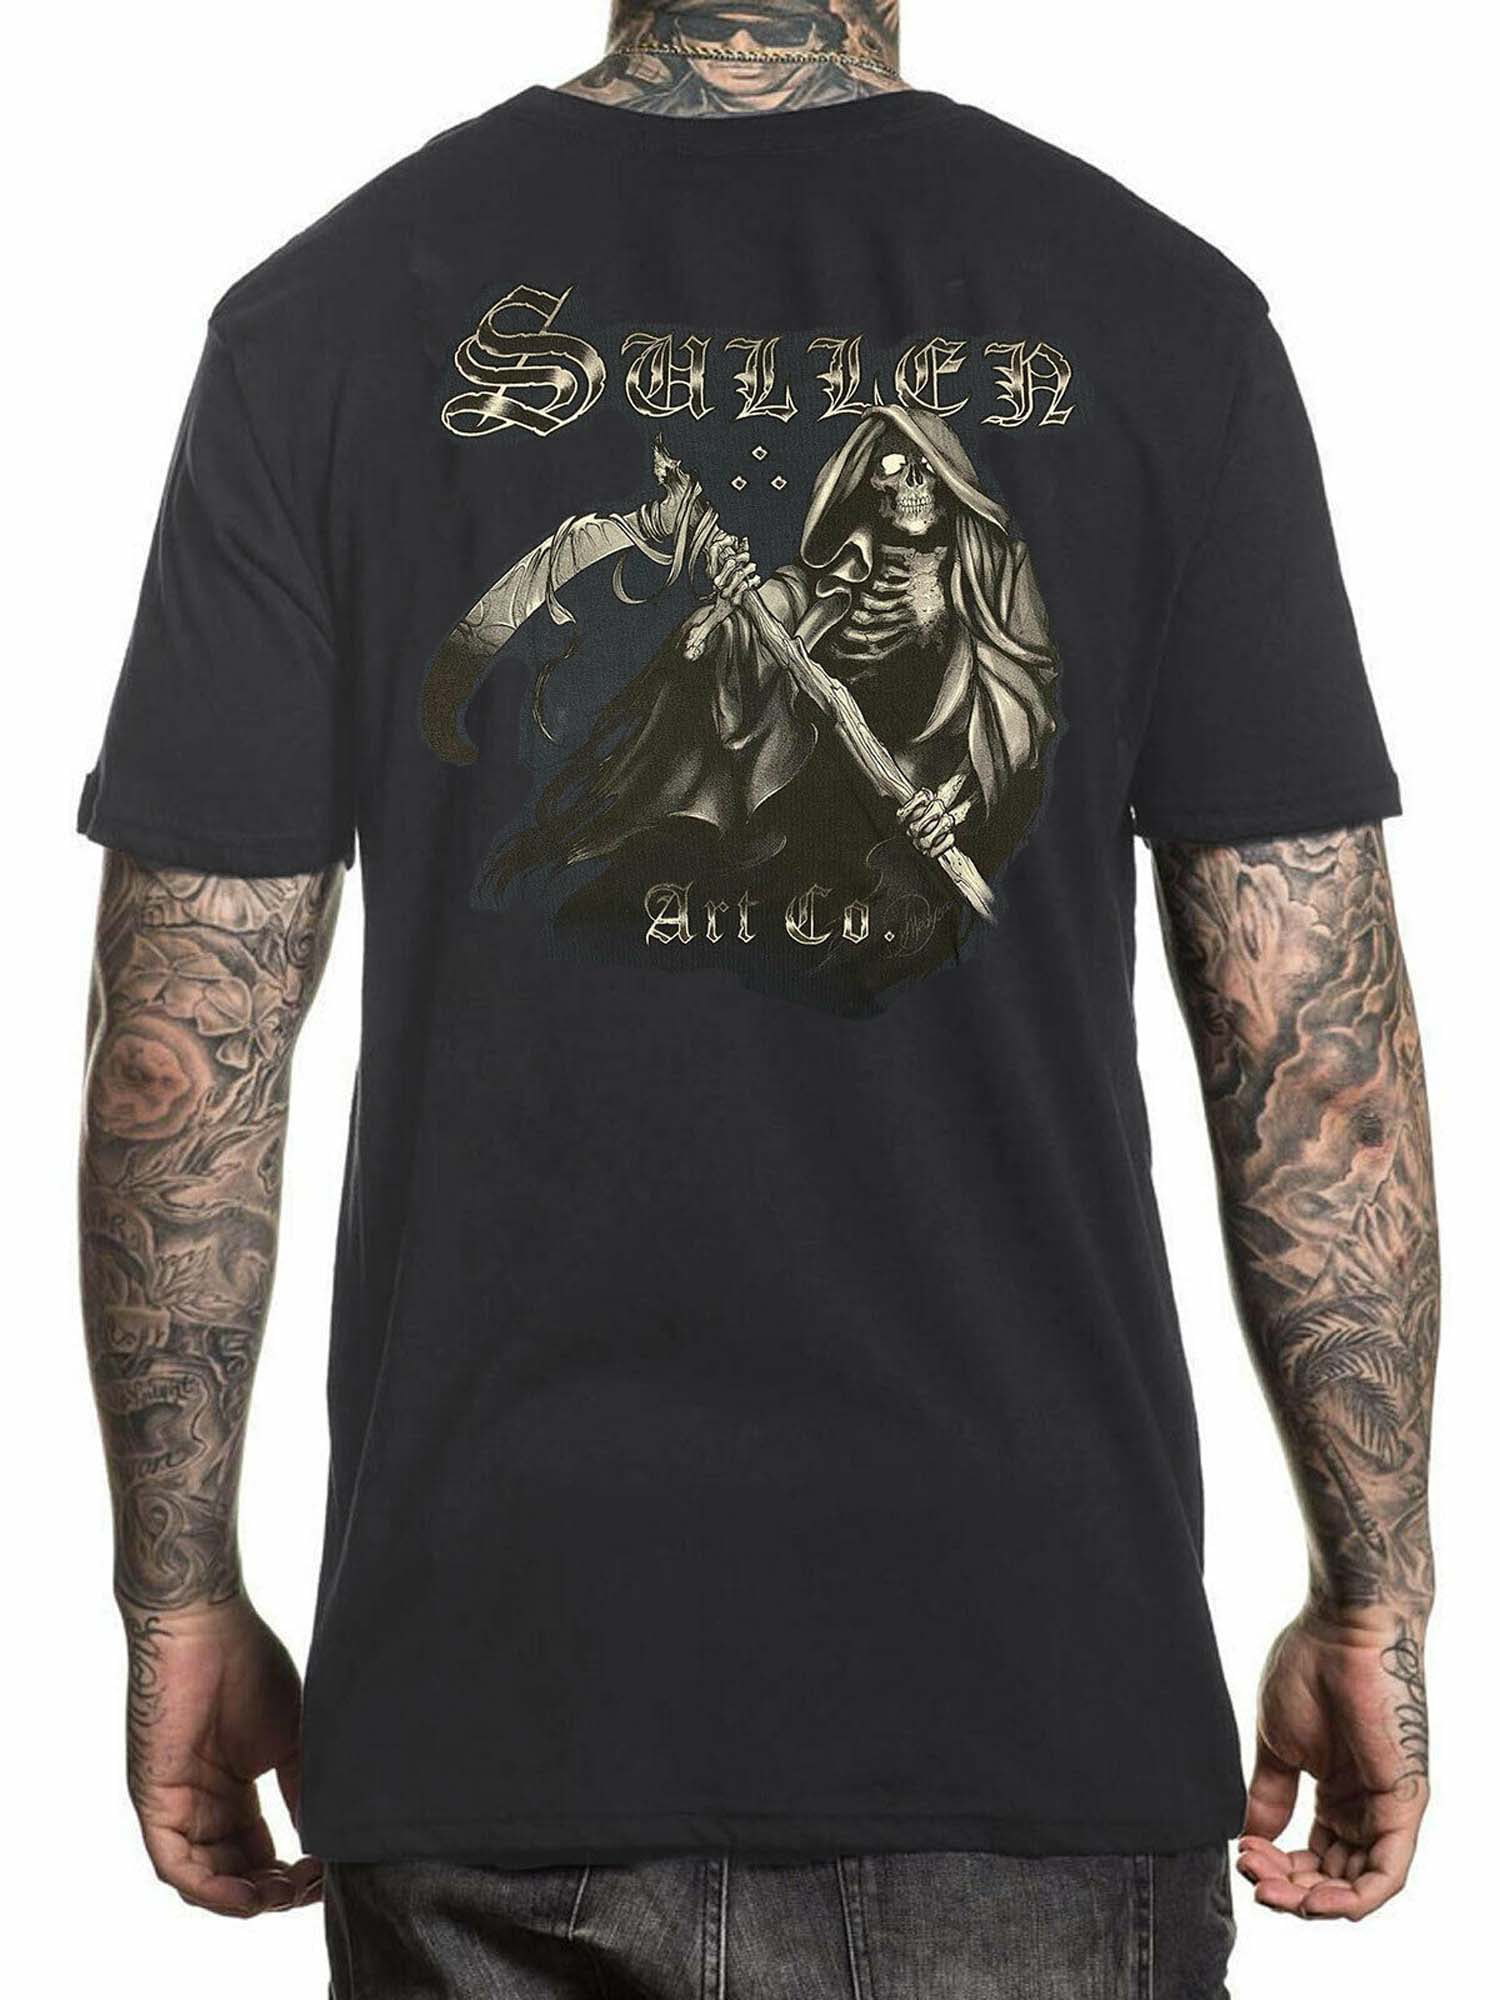 Sullen Men's Sailors Water Short Sleeve T Shirt Black Clothing Apparel Tattoo...